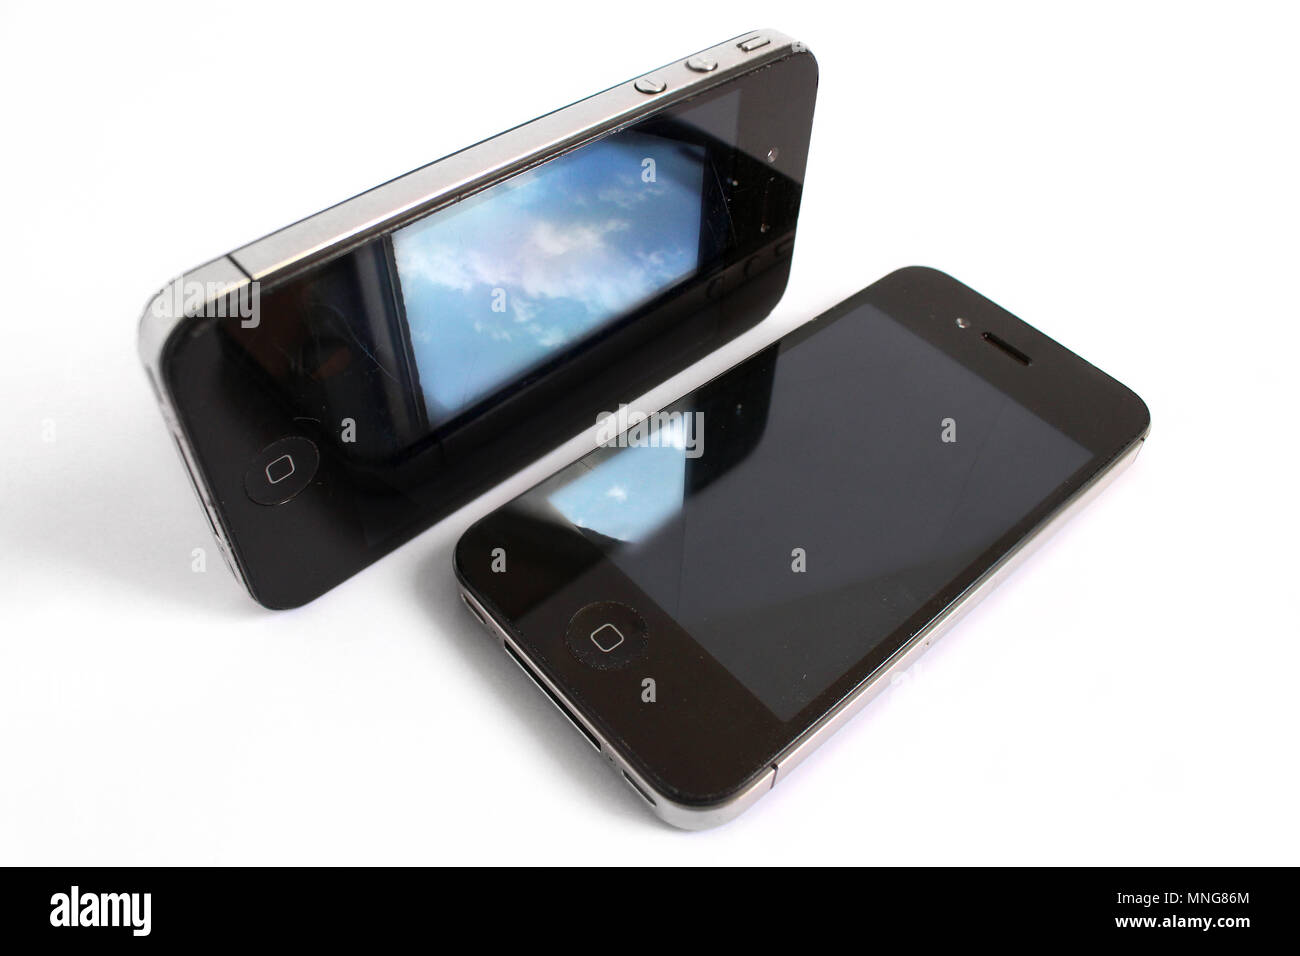 Iphone 4 e i-phone quattro s, doppia smatphone Foto Stock